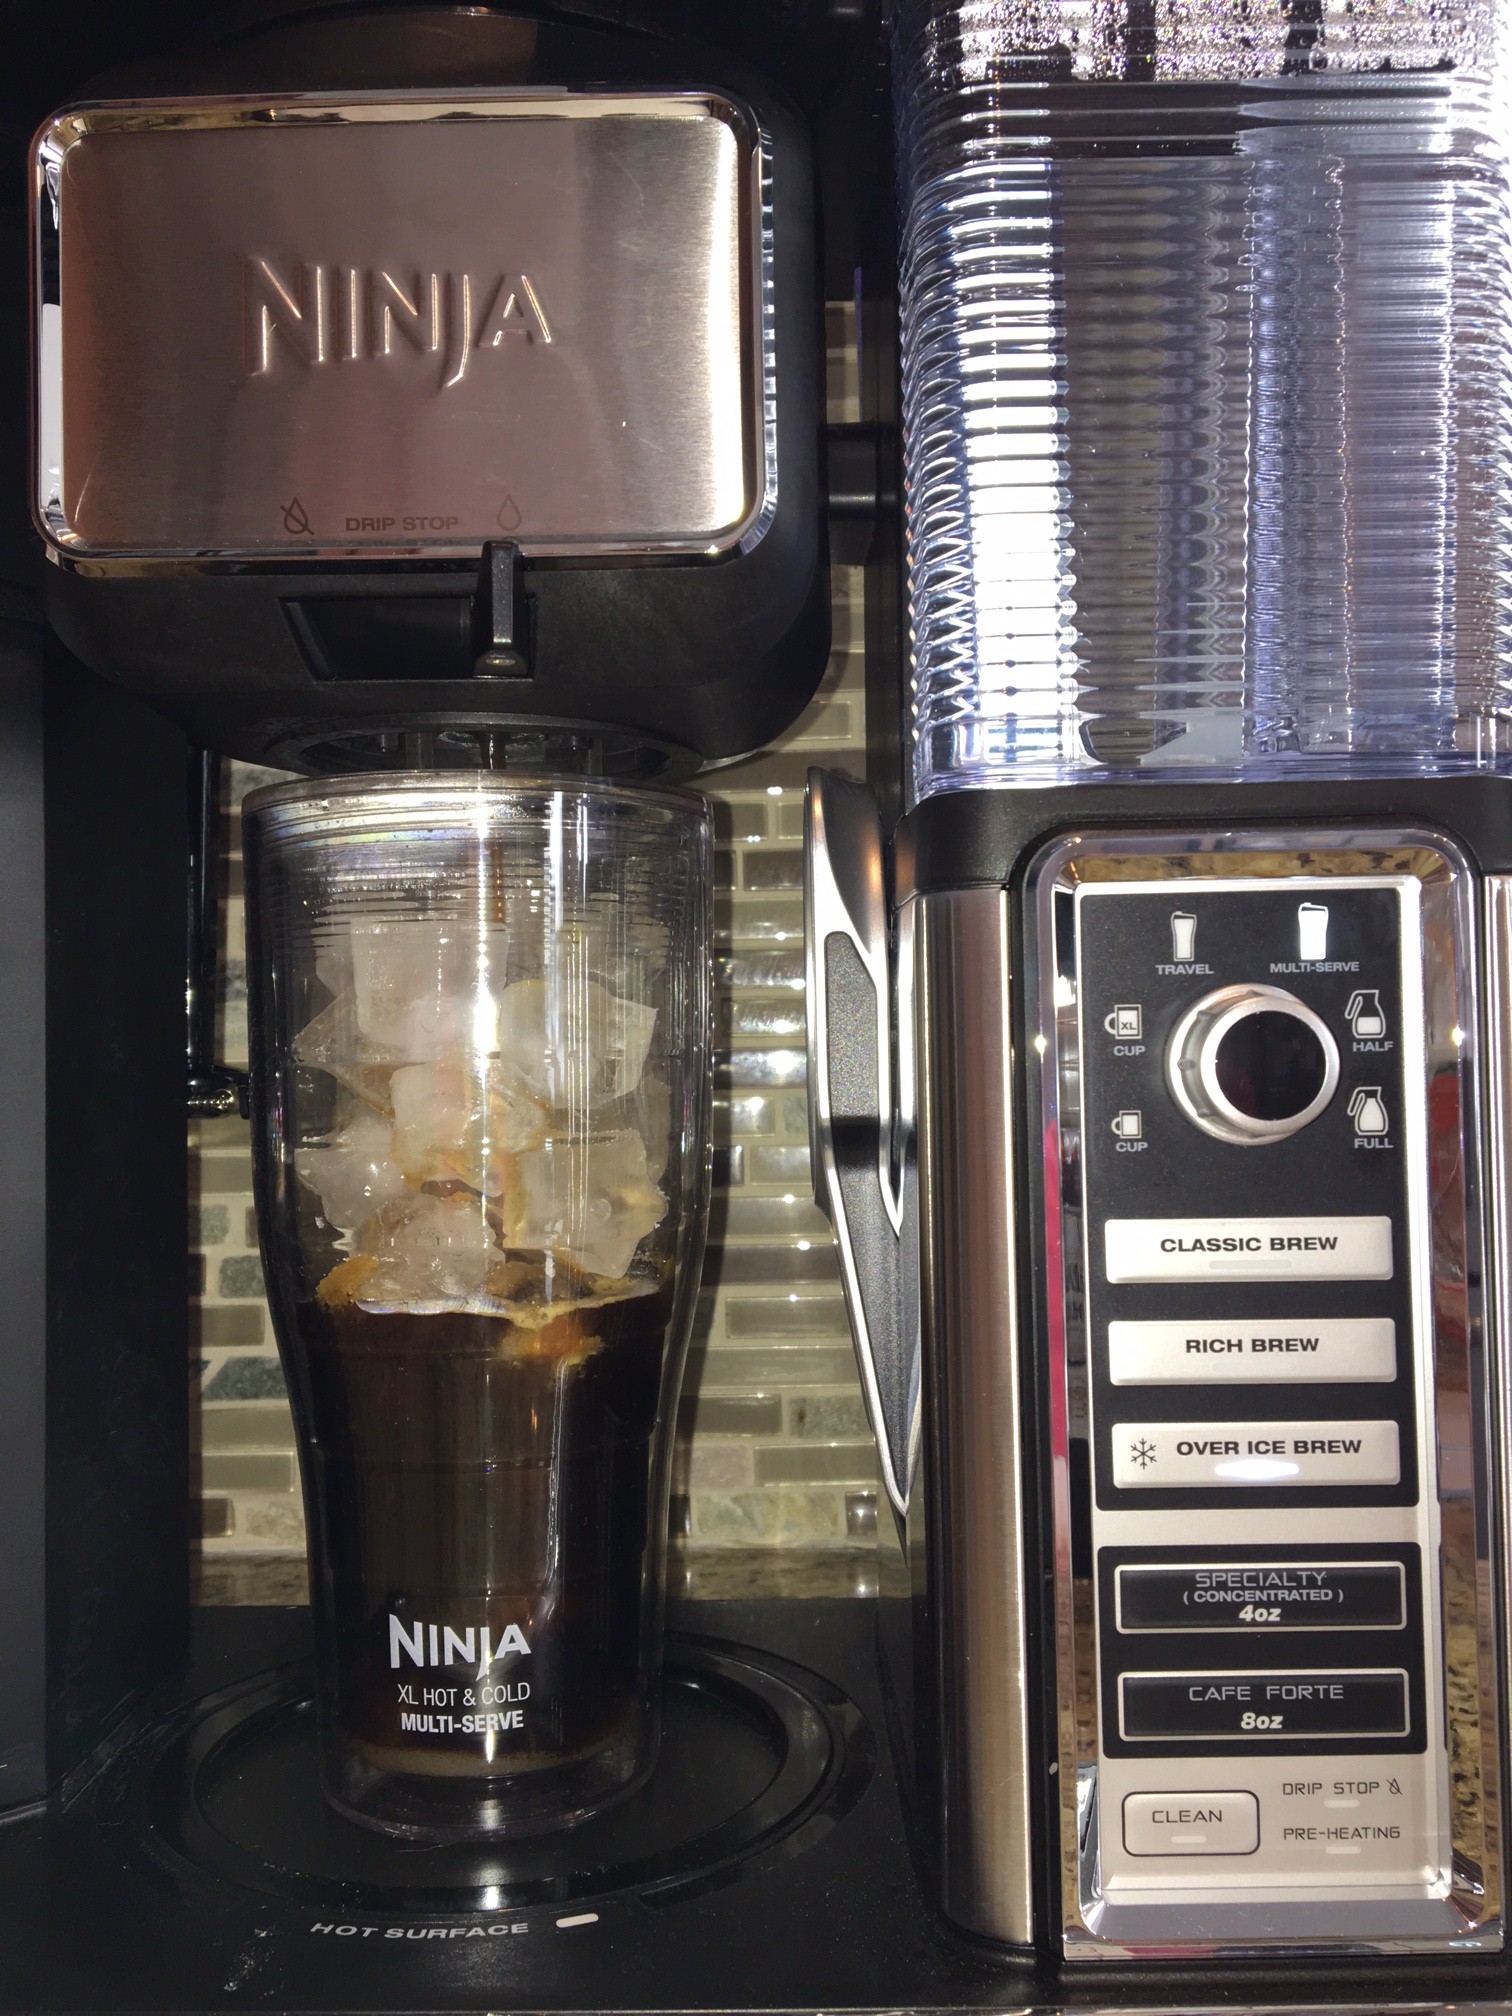 Ninja Coffee Bar System Review - Central Minnesota Mom